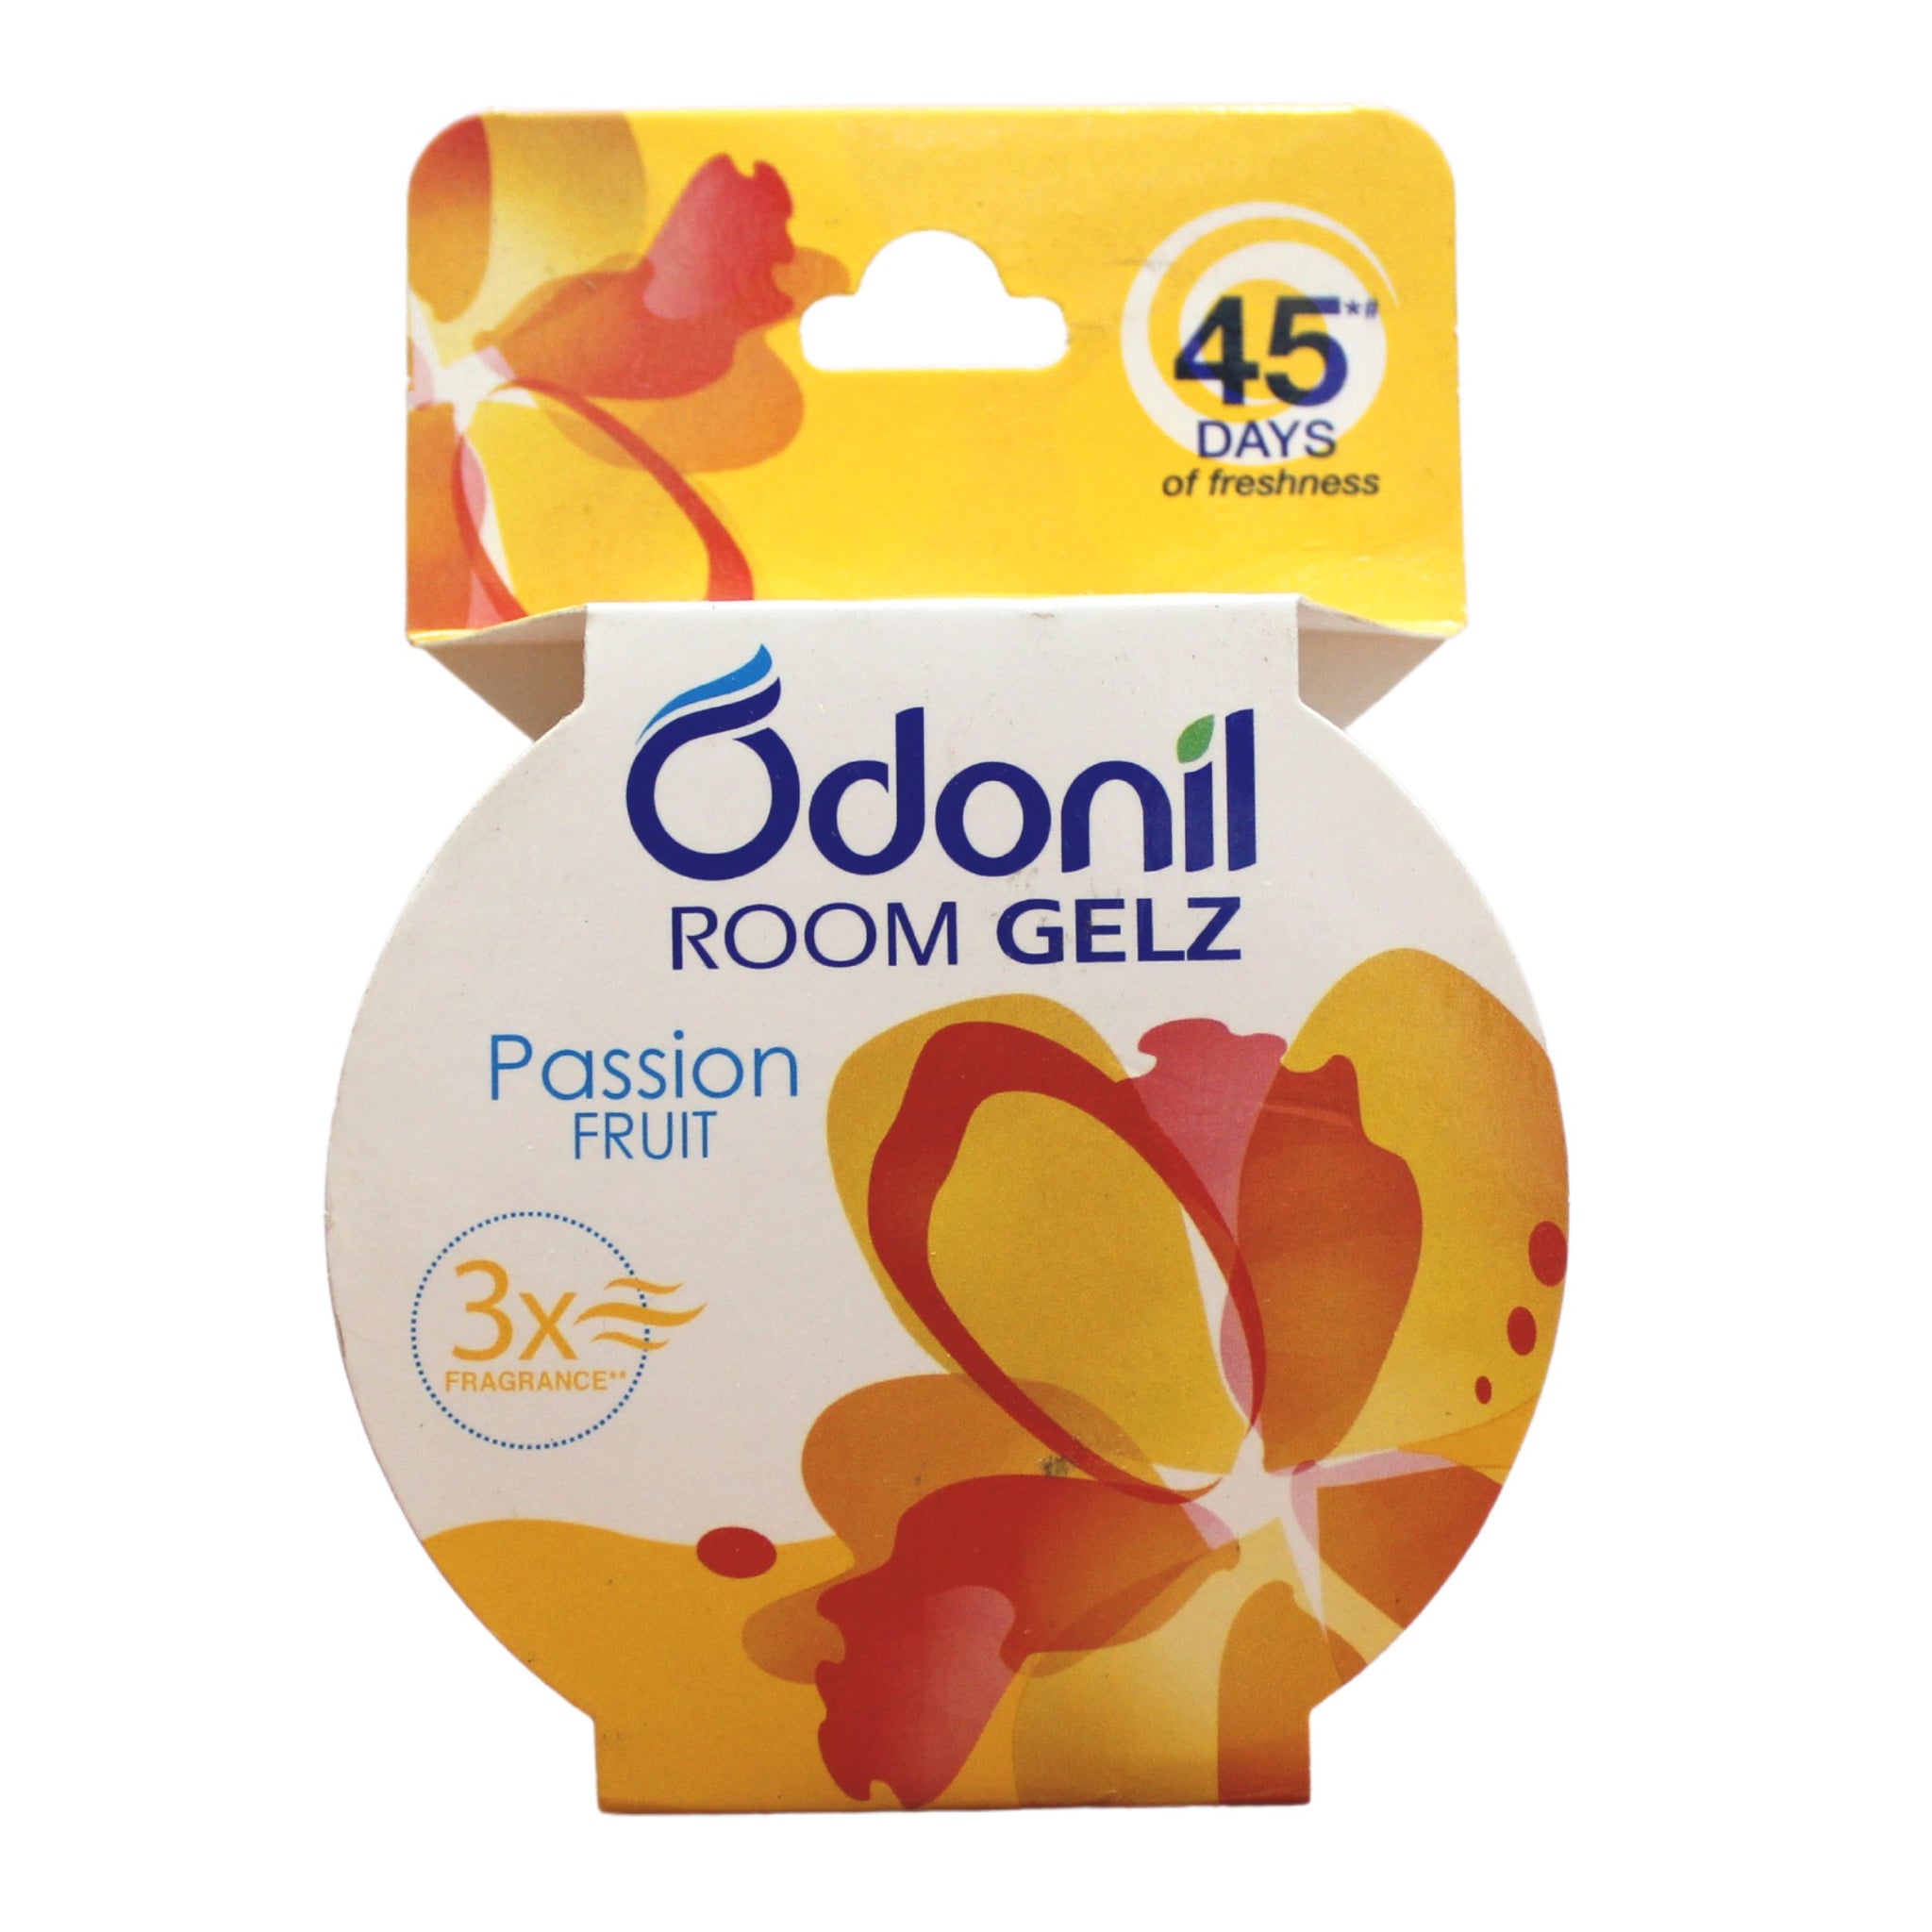 Odonil Room Gelz 75gm - Passion fruit Dabur